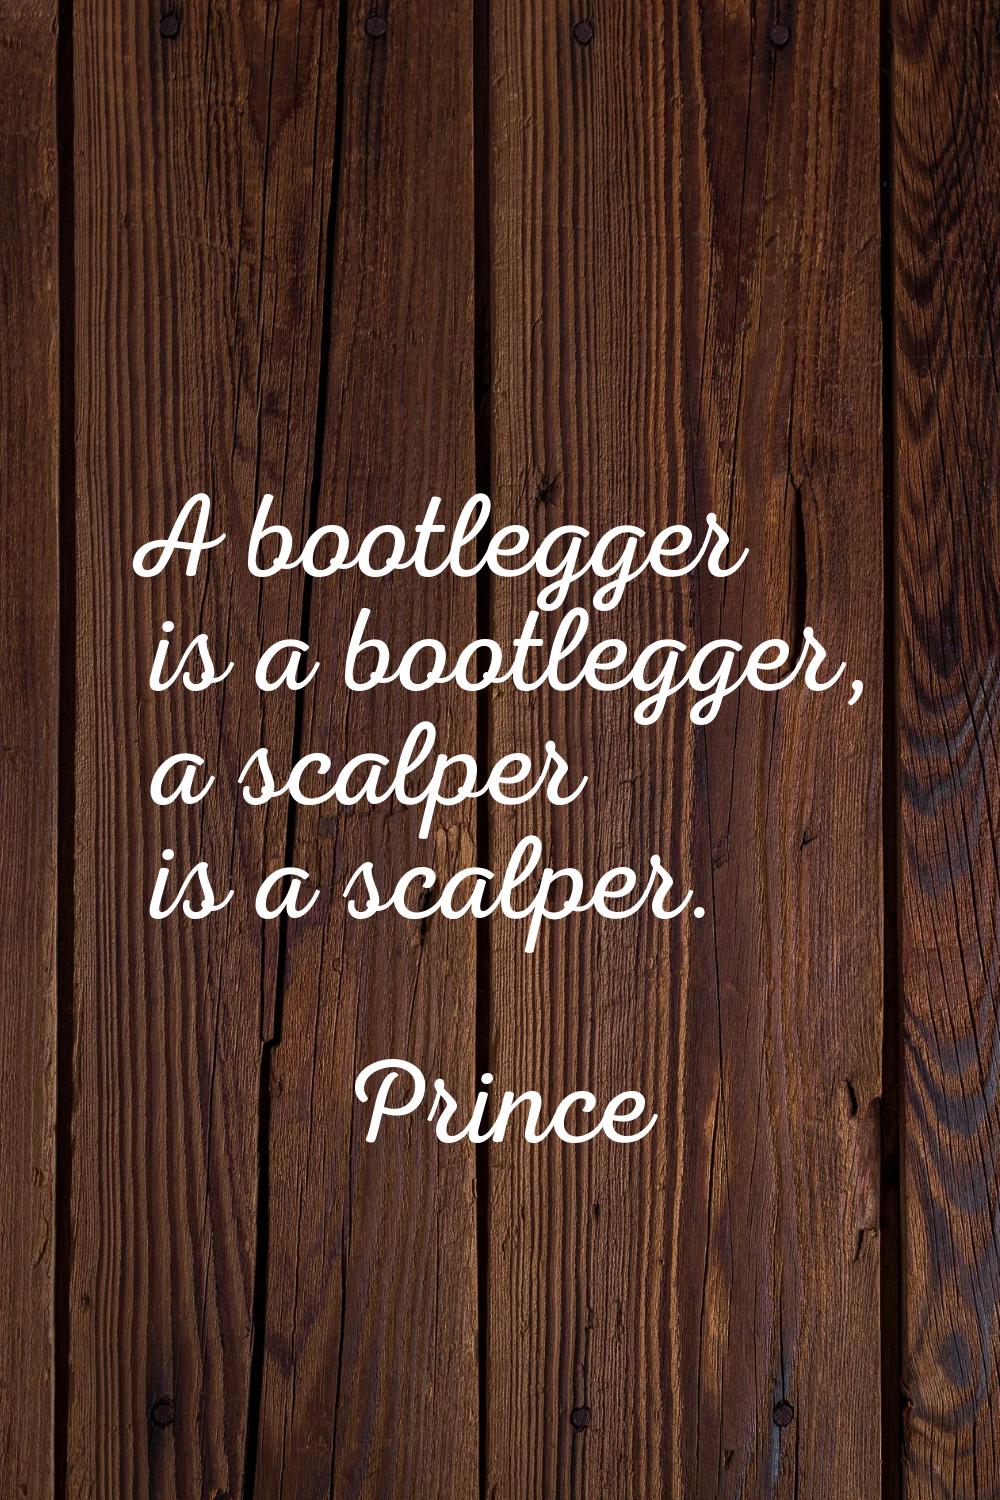 A bootlegger is a bootlegger, a scalper is a scalper.